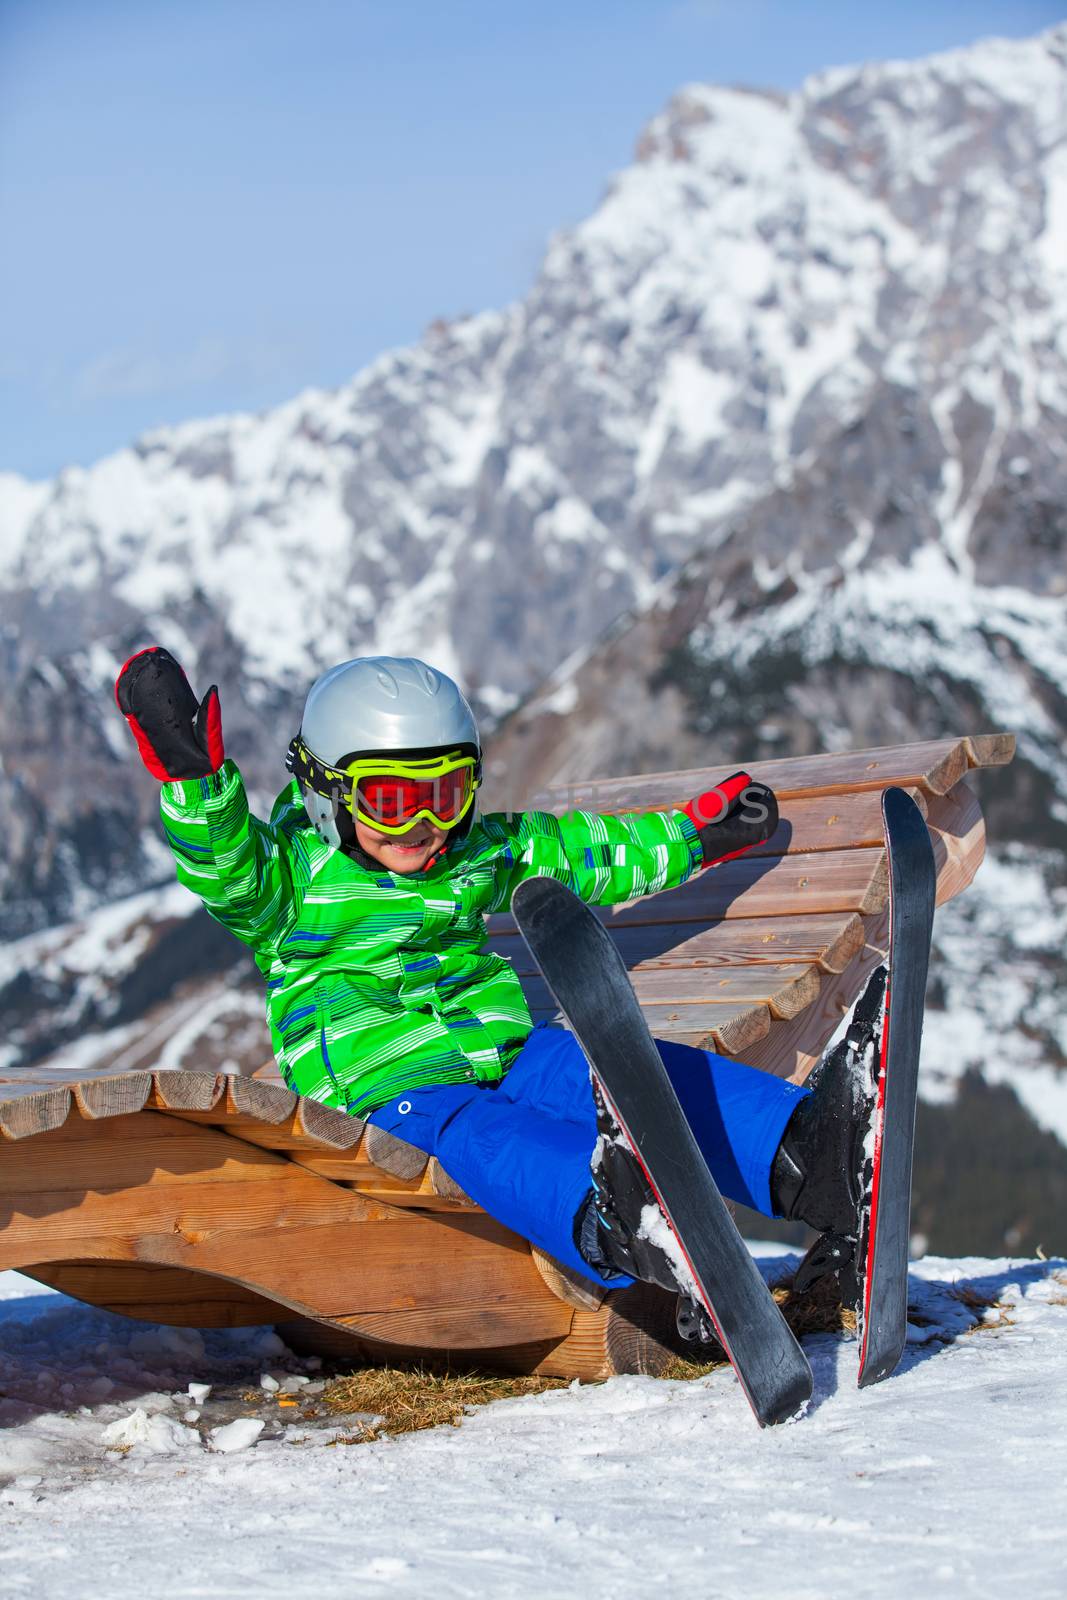 Ski, skier, winter - lovely boy has a fun on ski